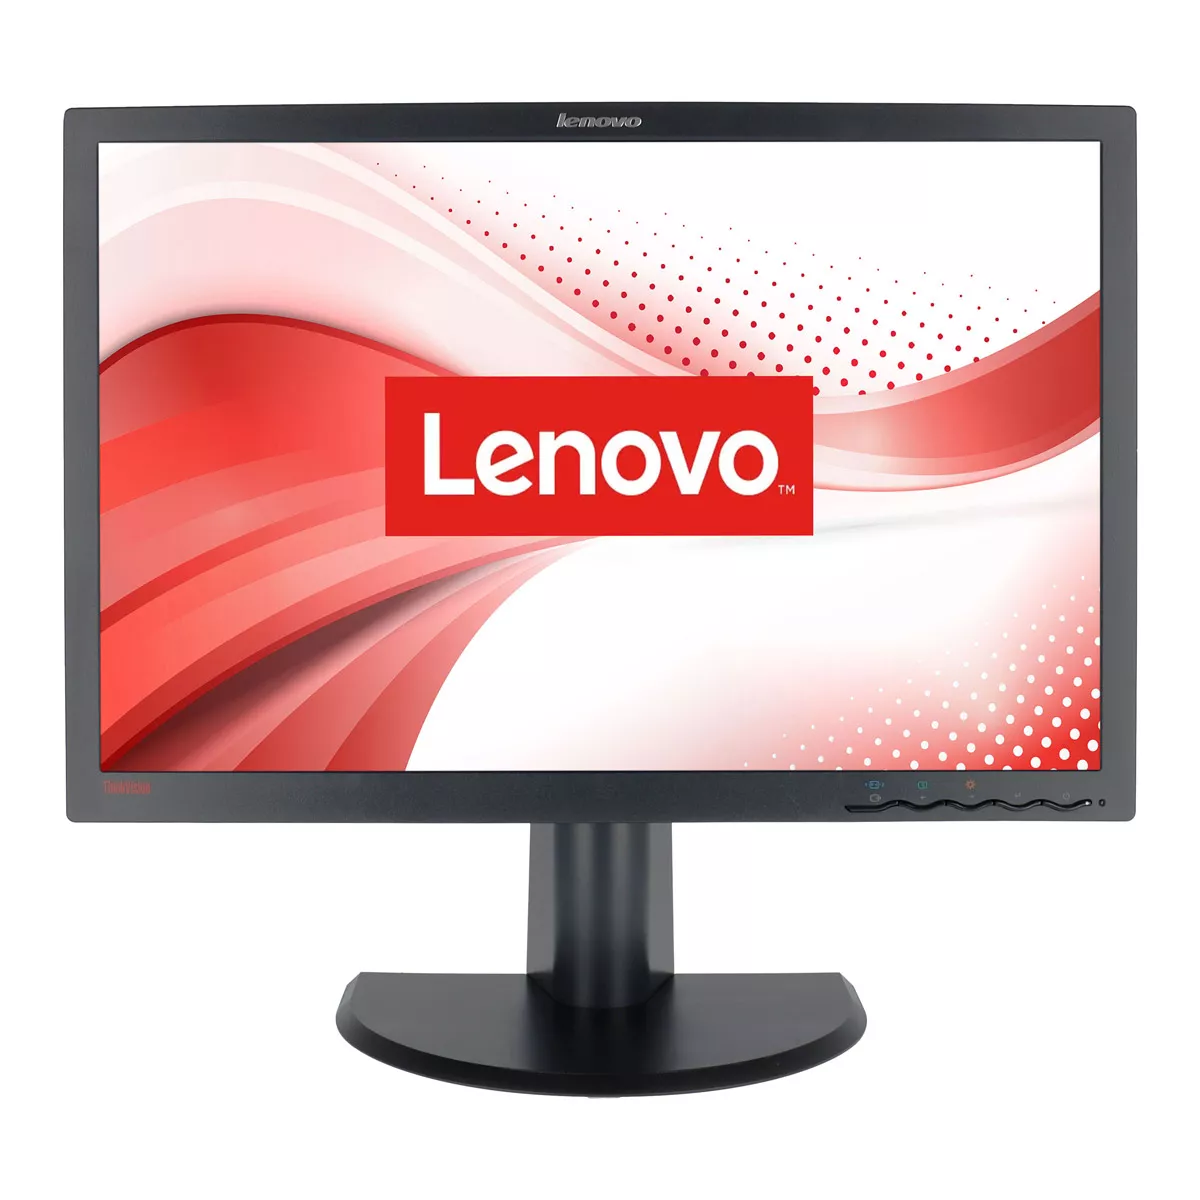 Lenovo Thinkvision LT2452p 24,0 Zoll IPS-Panel LED höhenverstellbar A+